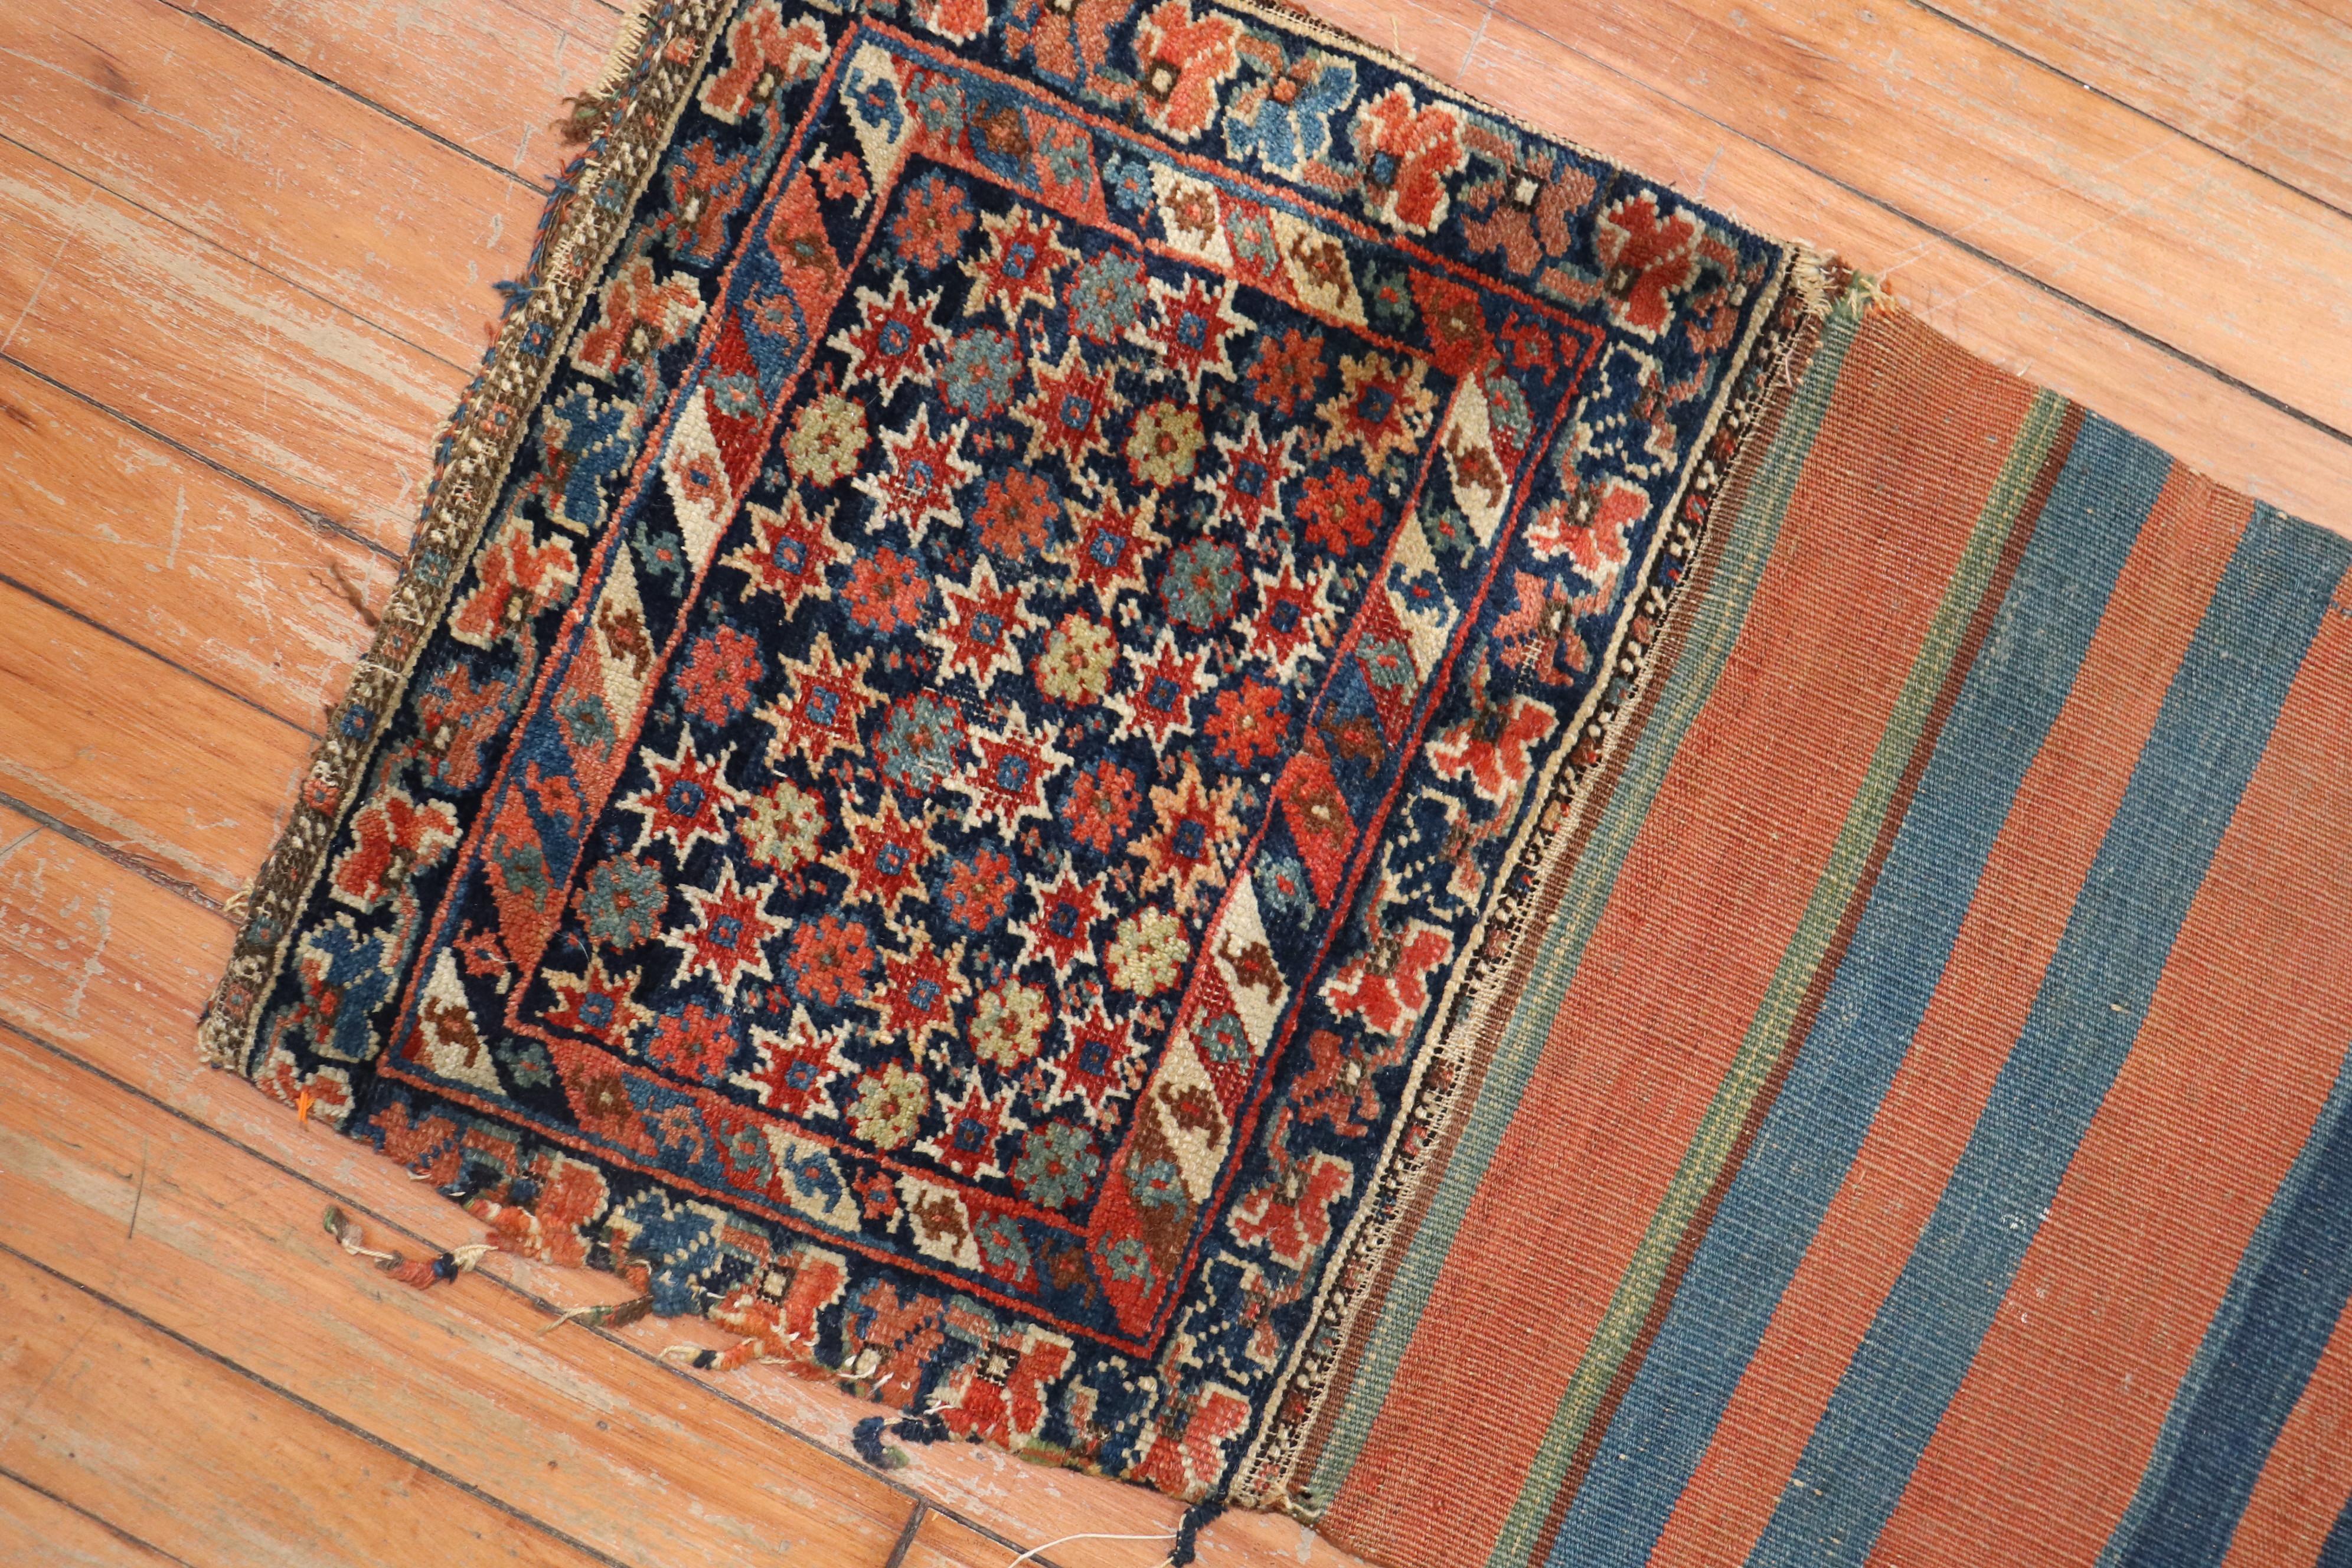 An early 20th century colorful Kurd Bagface rug 

Measures: 1'5